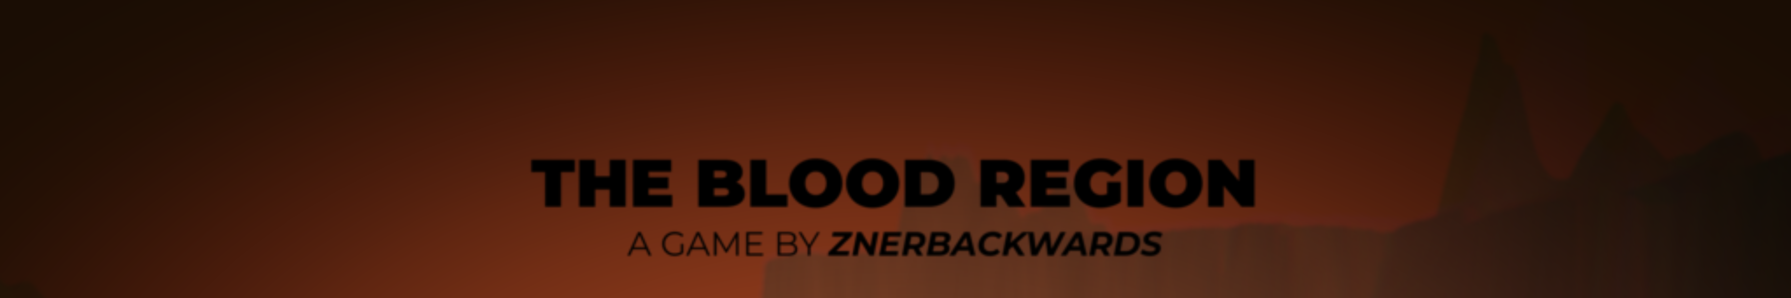 The Blood Region